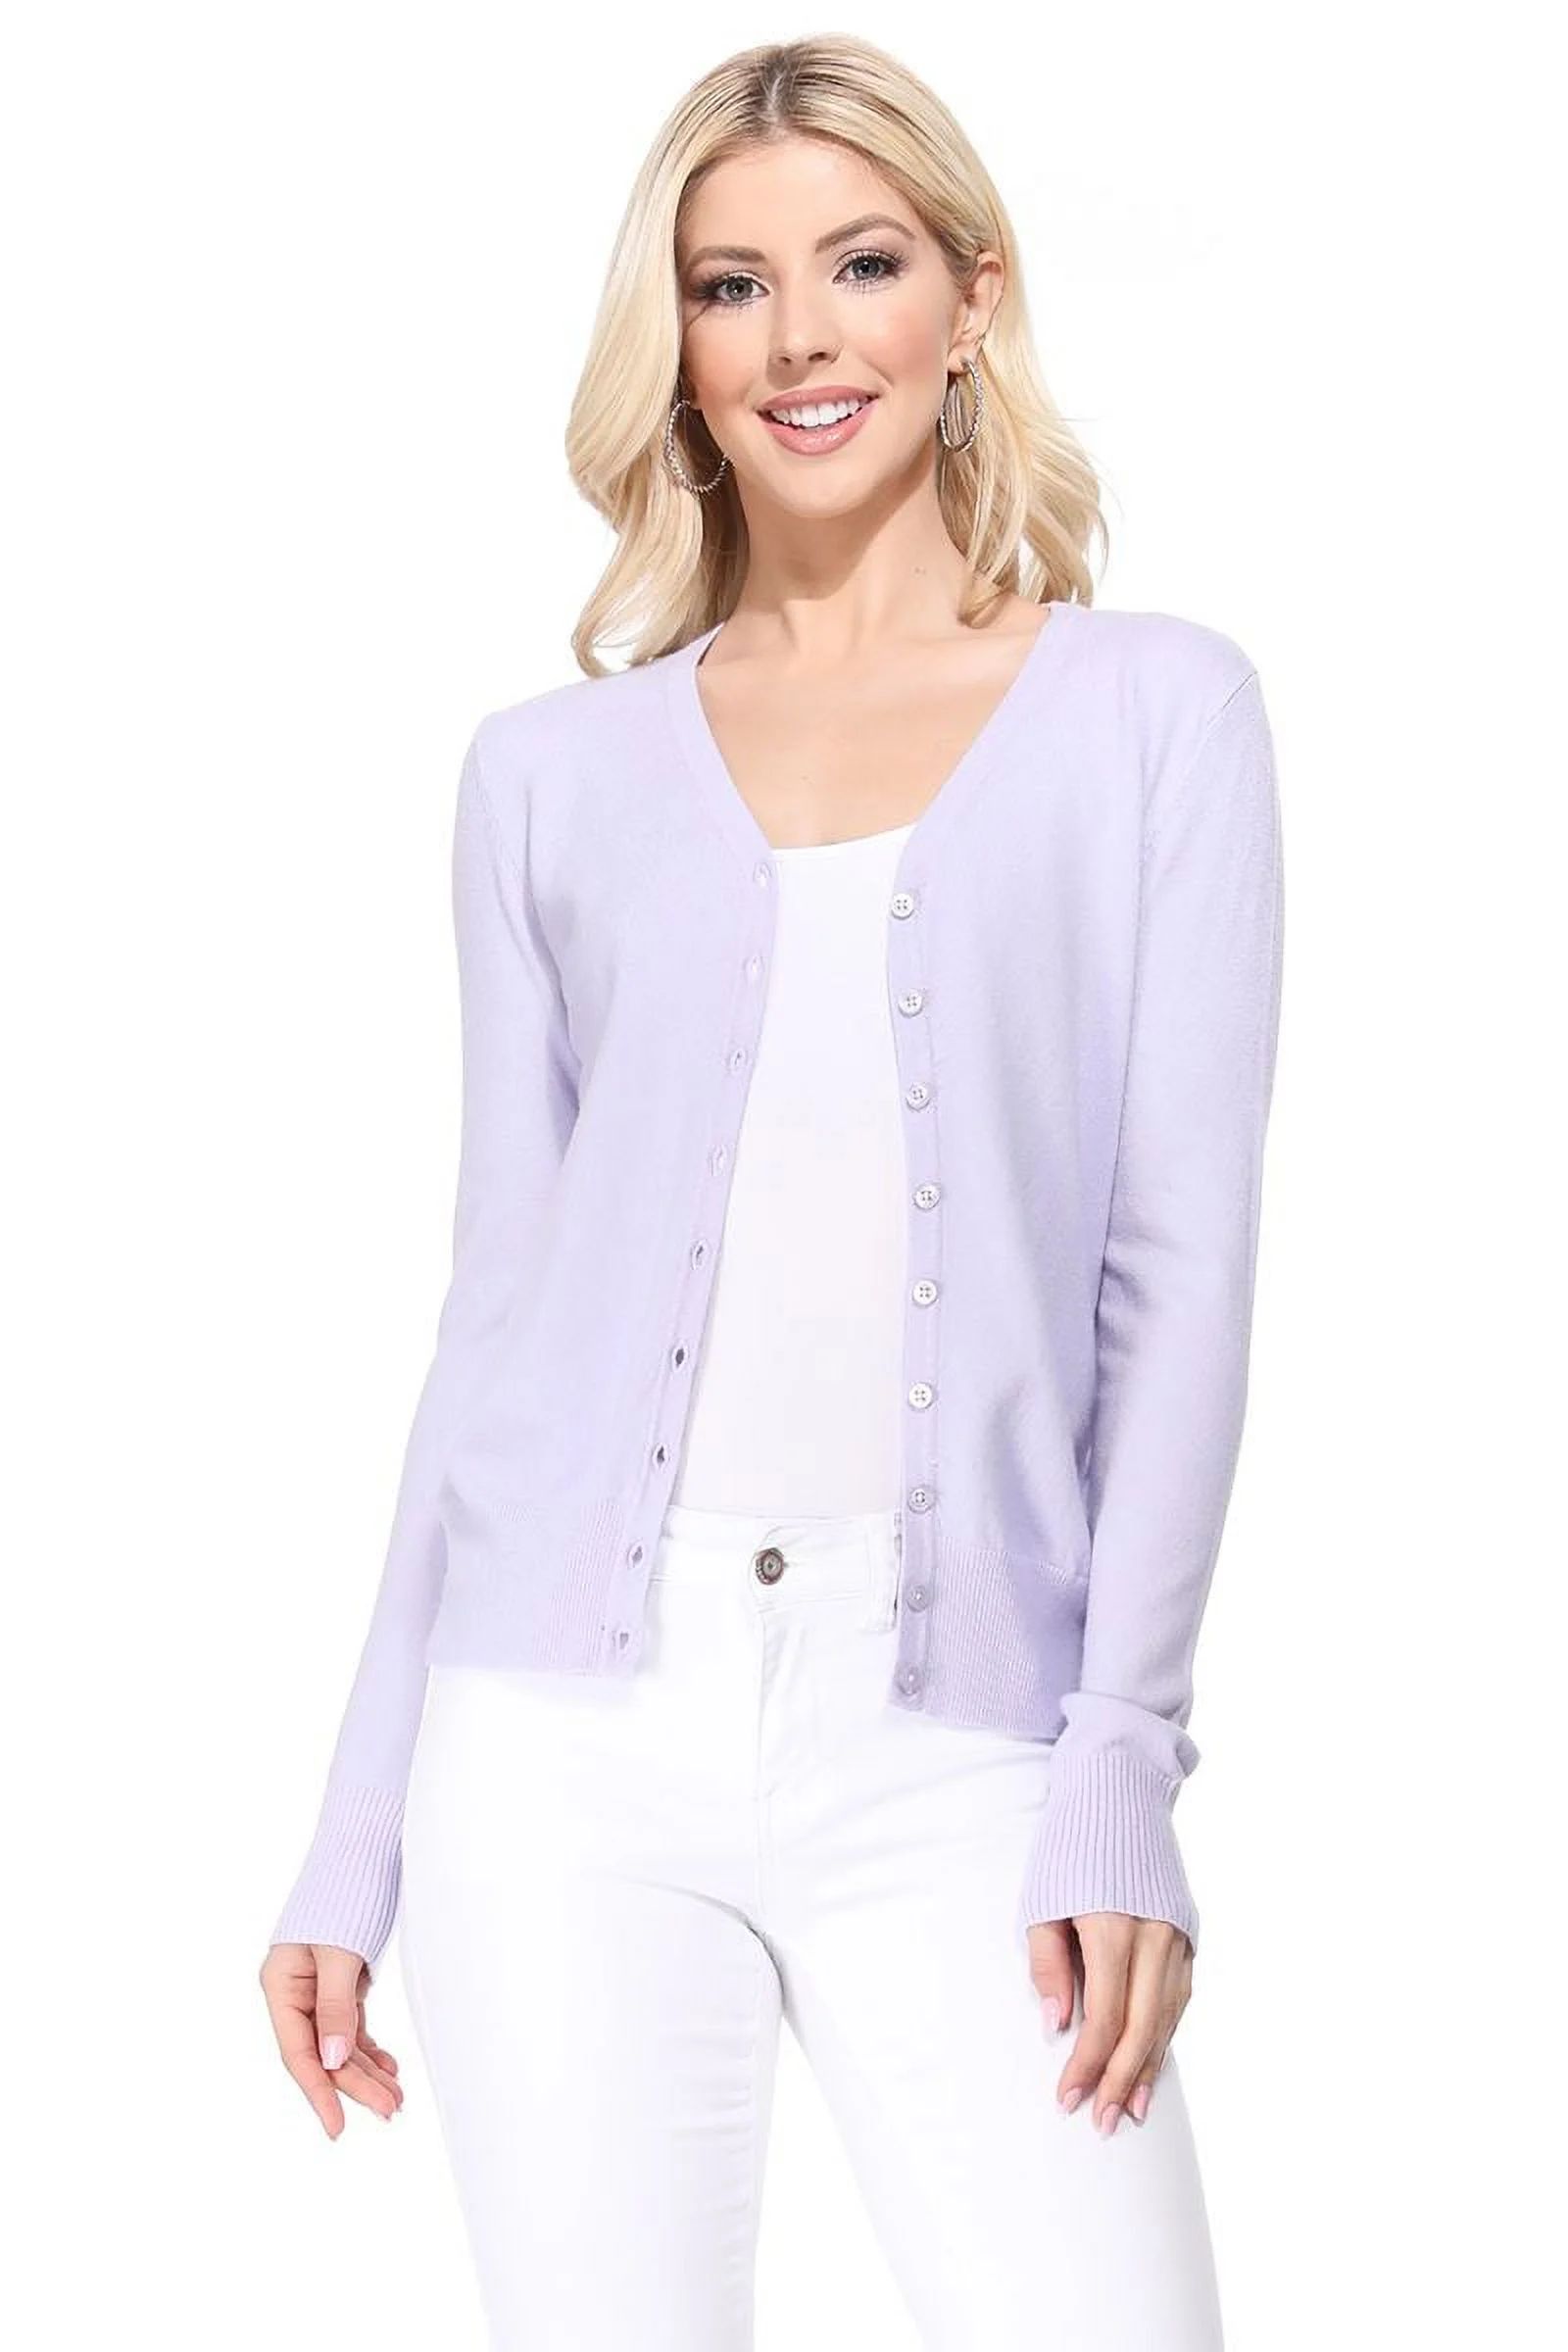 YEMAK Women's Long Sleeve V-Neck Button Down Soft Knit Cardigan Sweater MK5178-Lilac-M | Walmart (US)